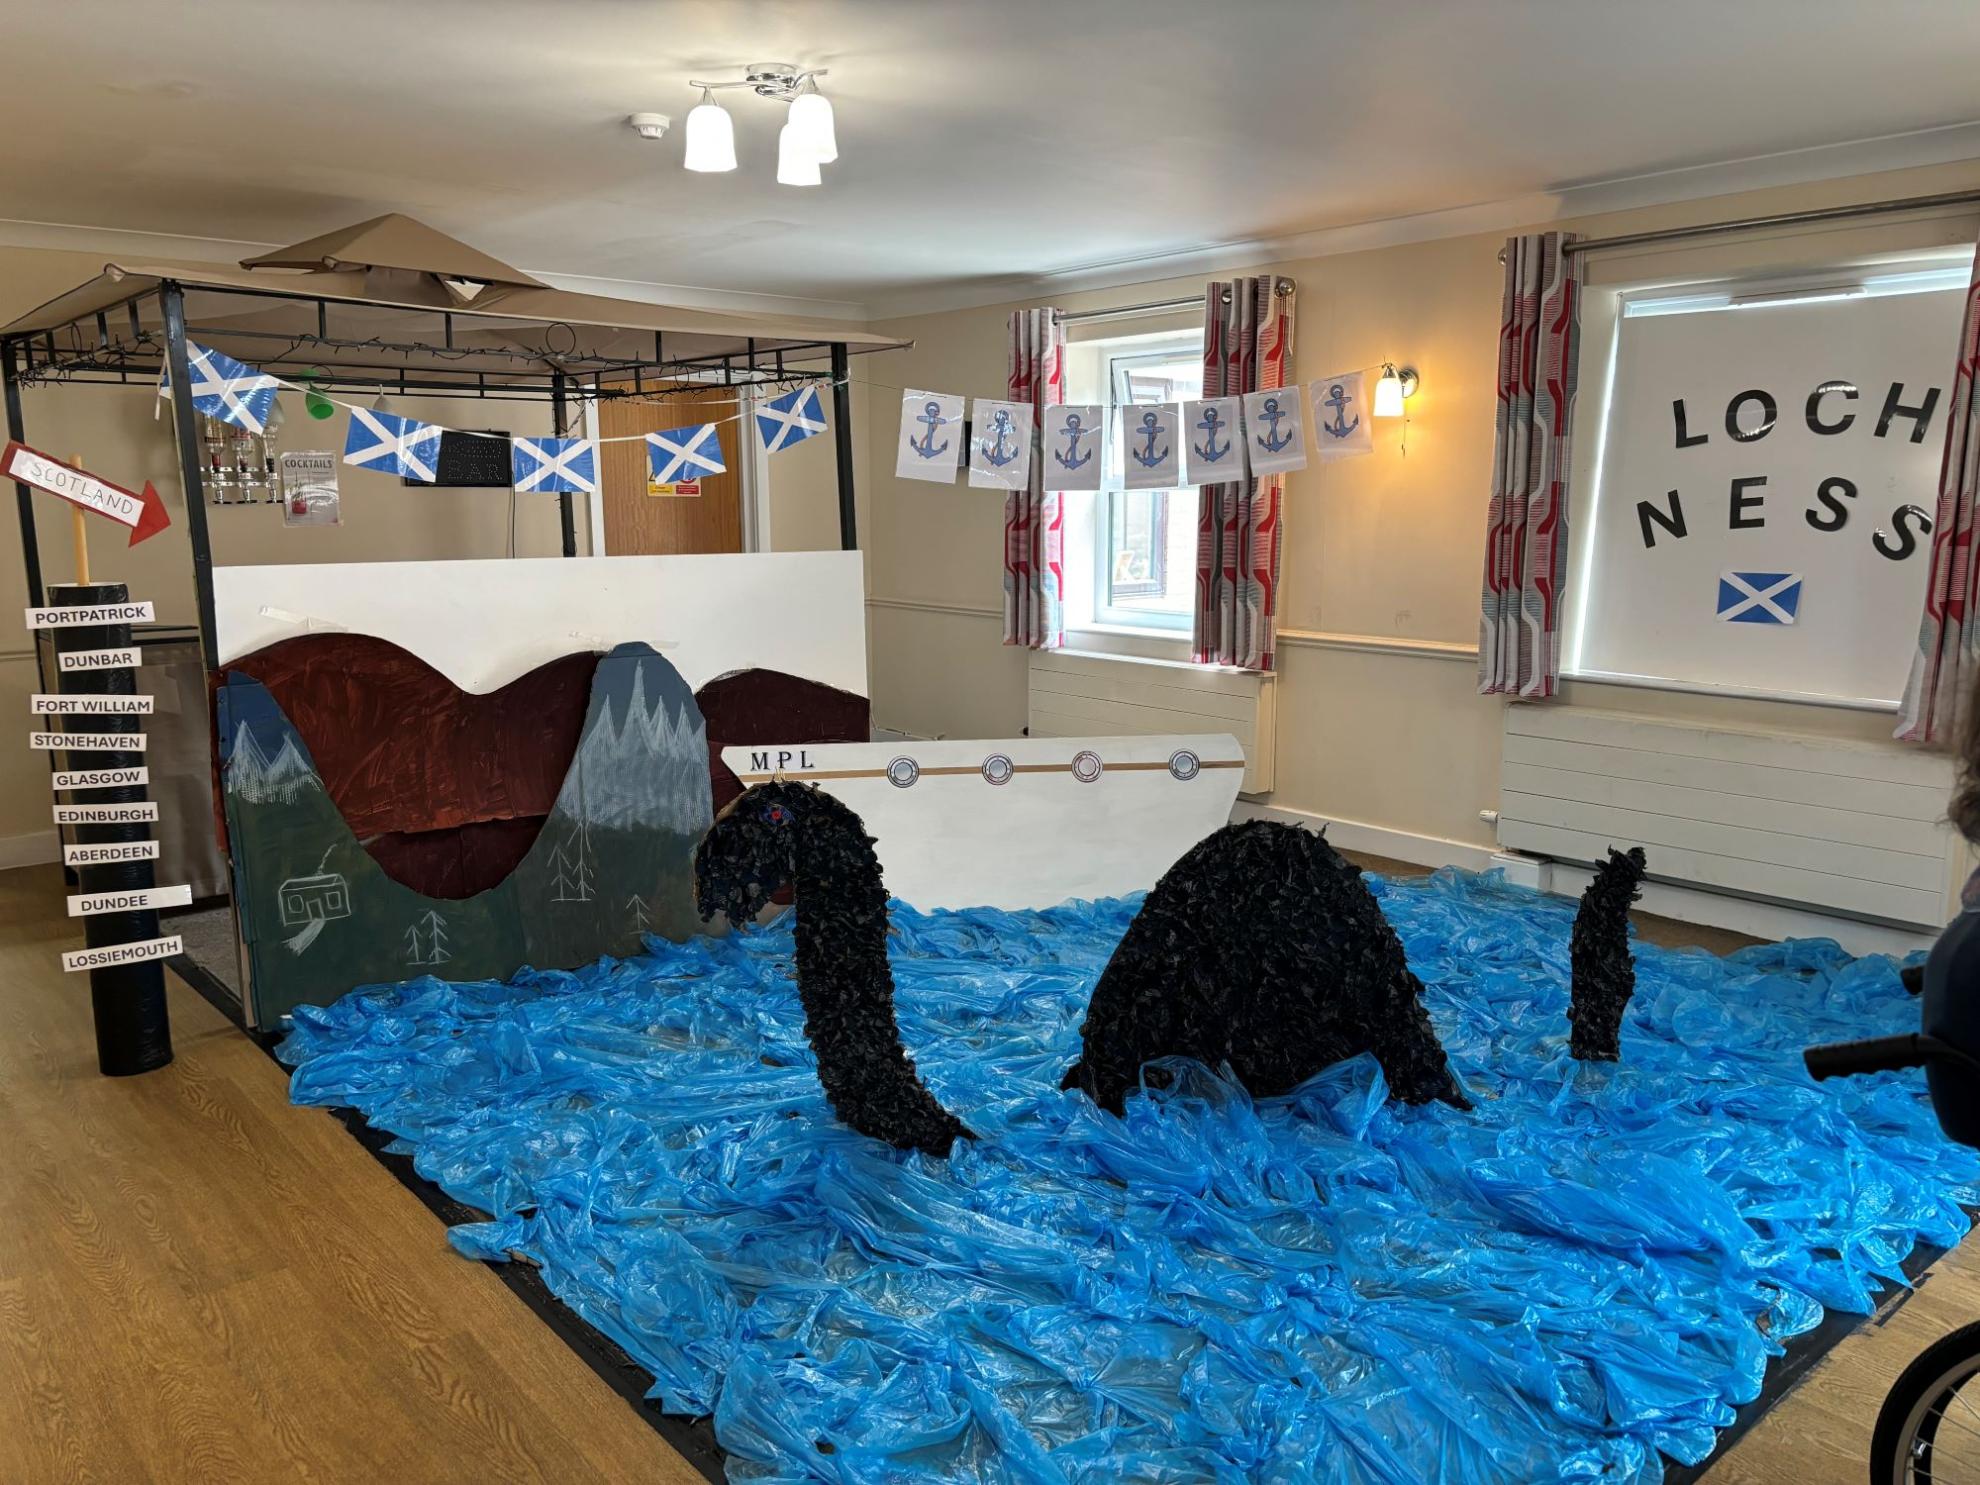 Loch Ness Monster at Middleton Park Lodge Nursing Home in Leeds